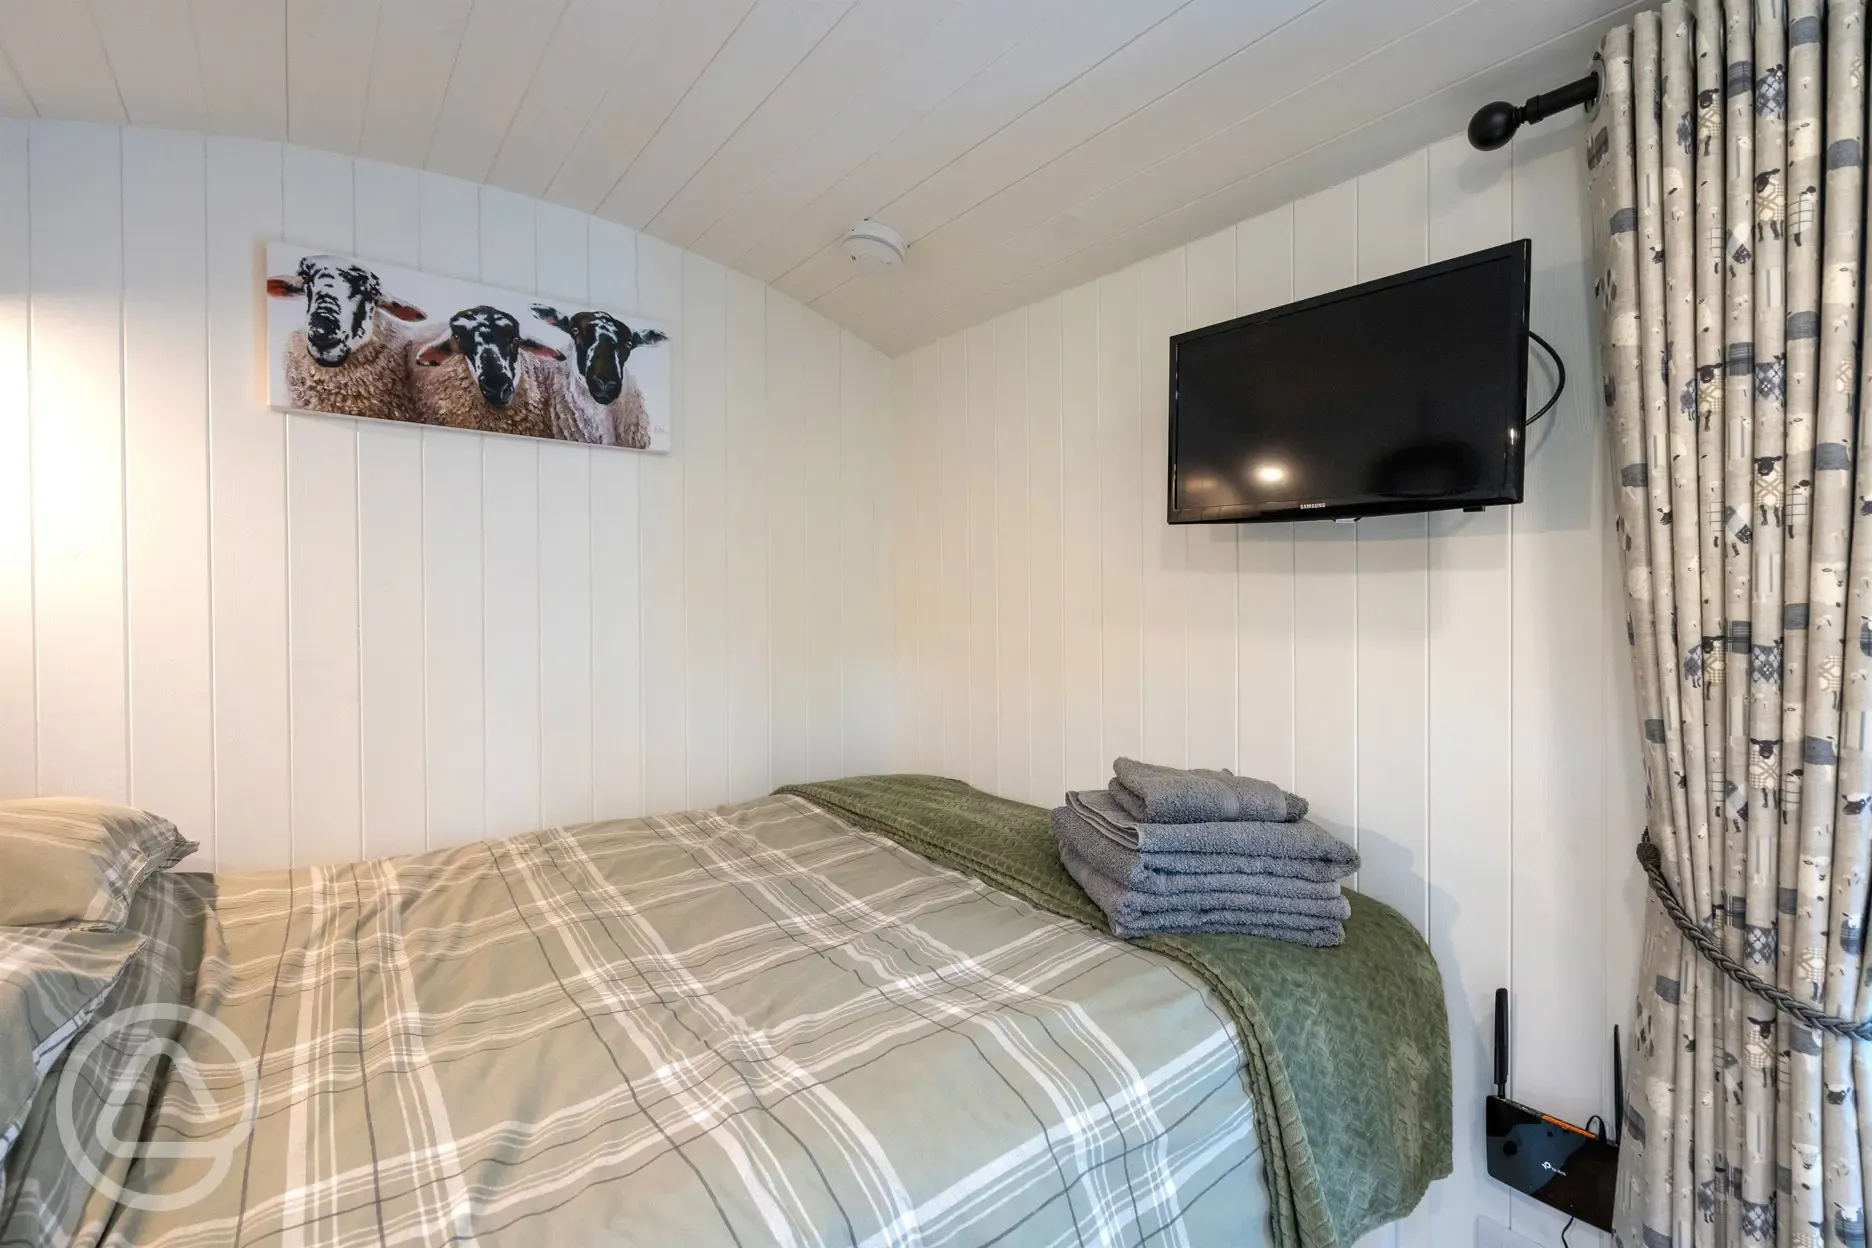 Shepherd's hut double bed with TV